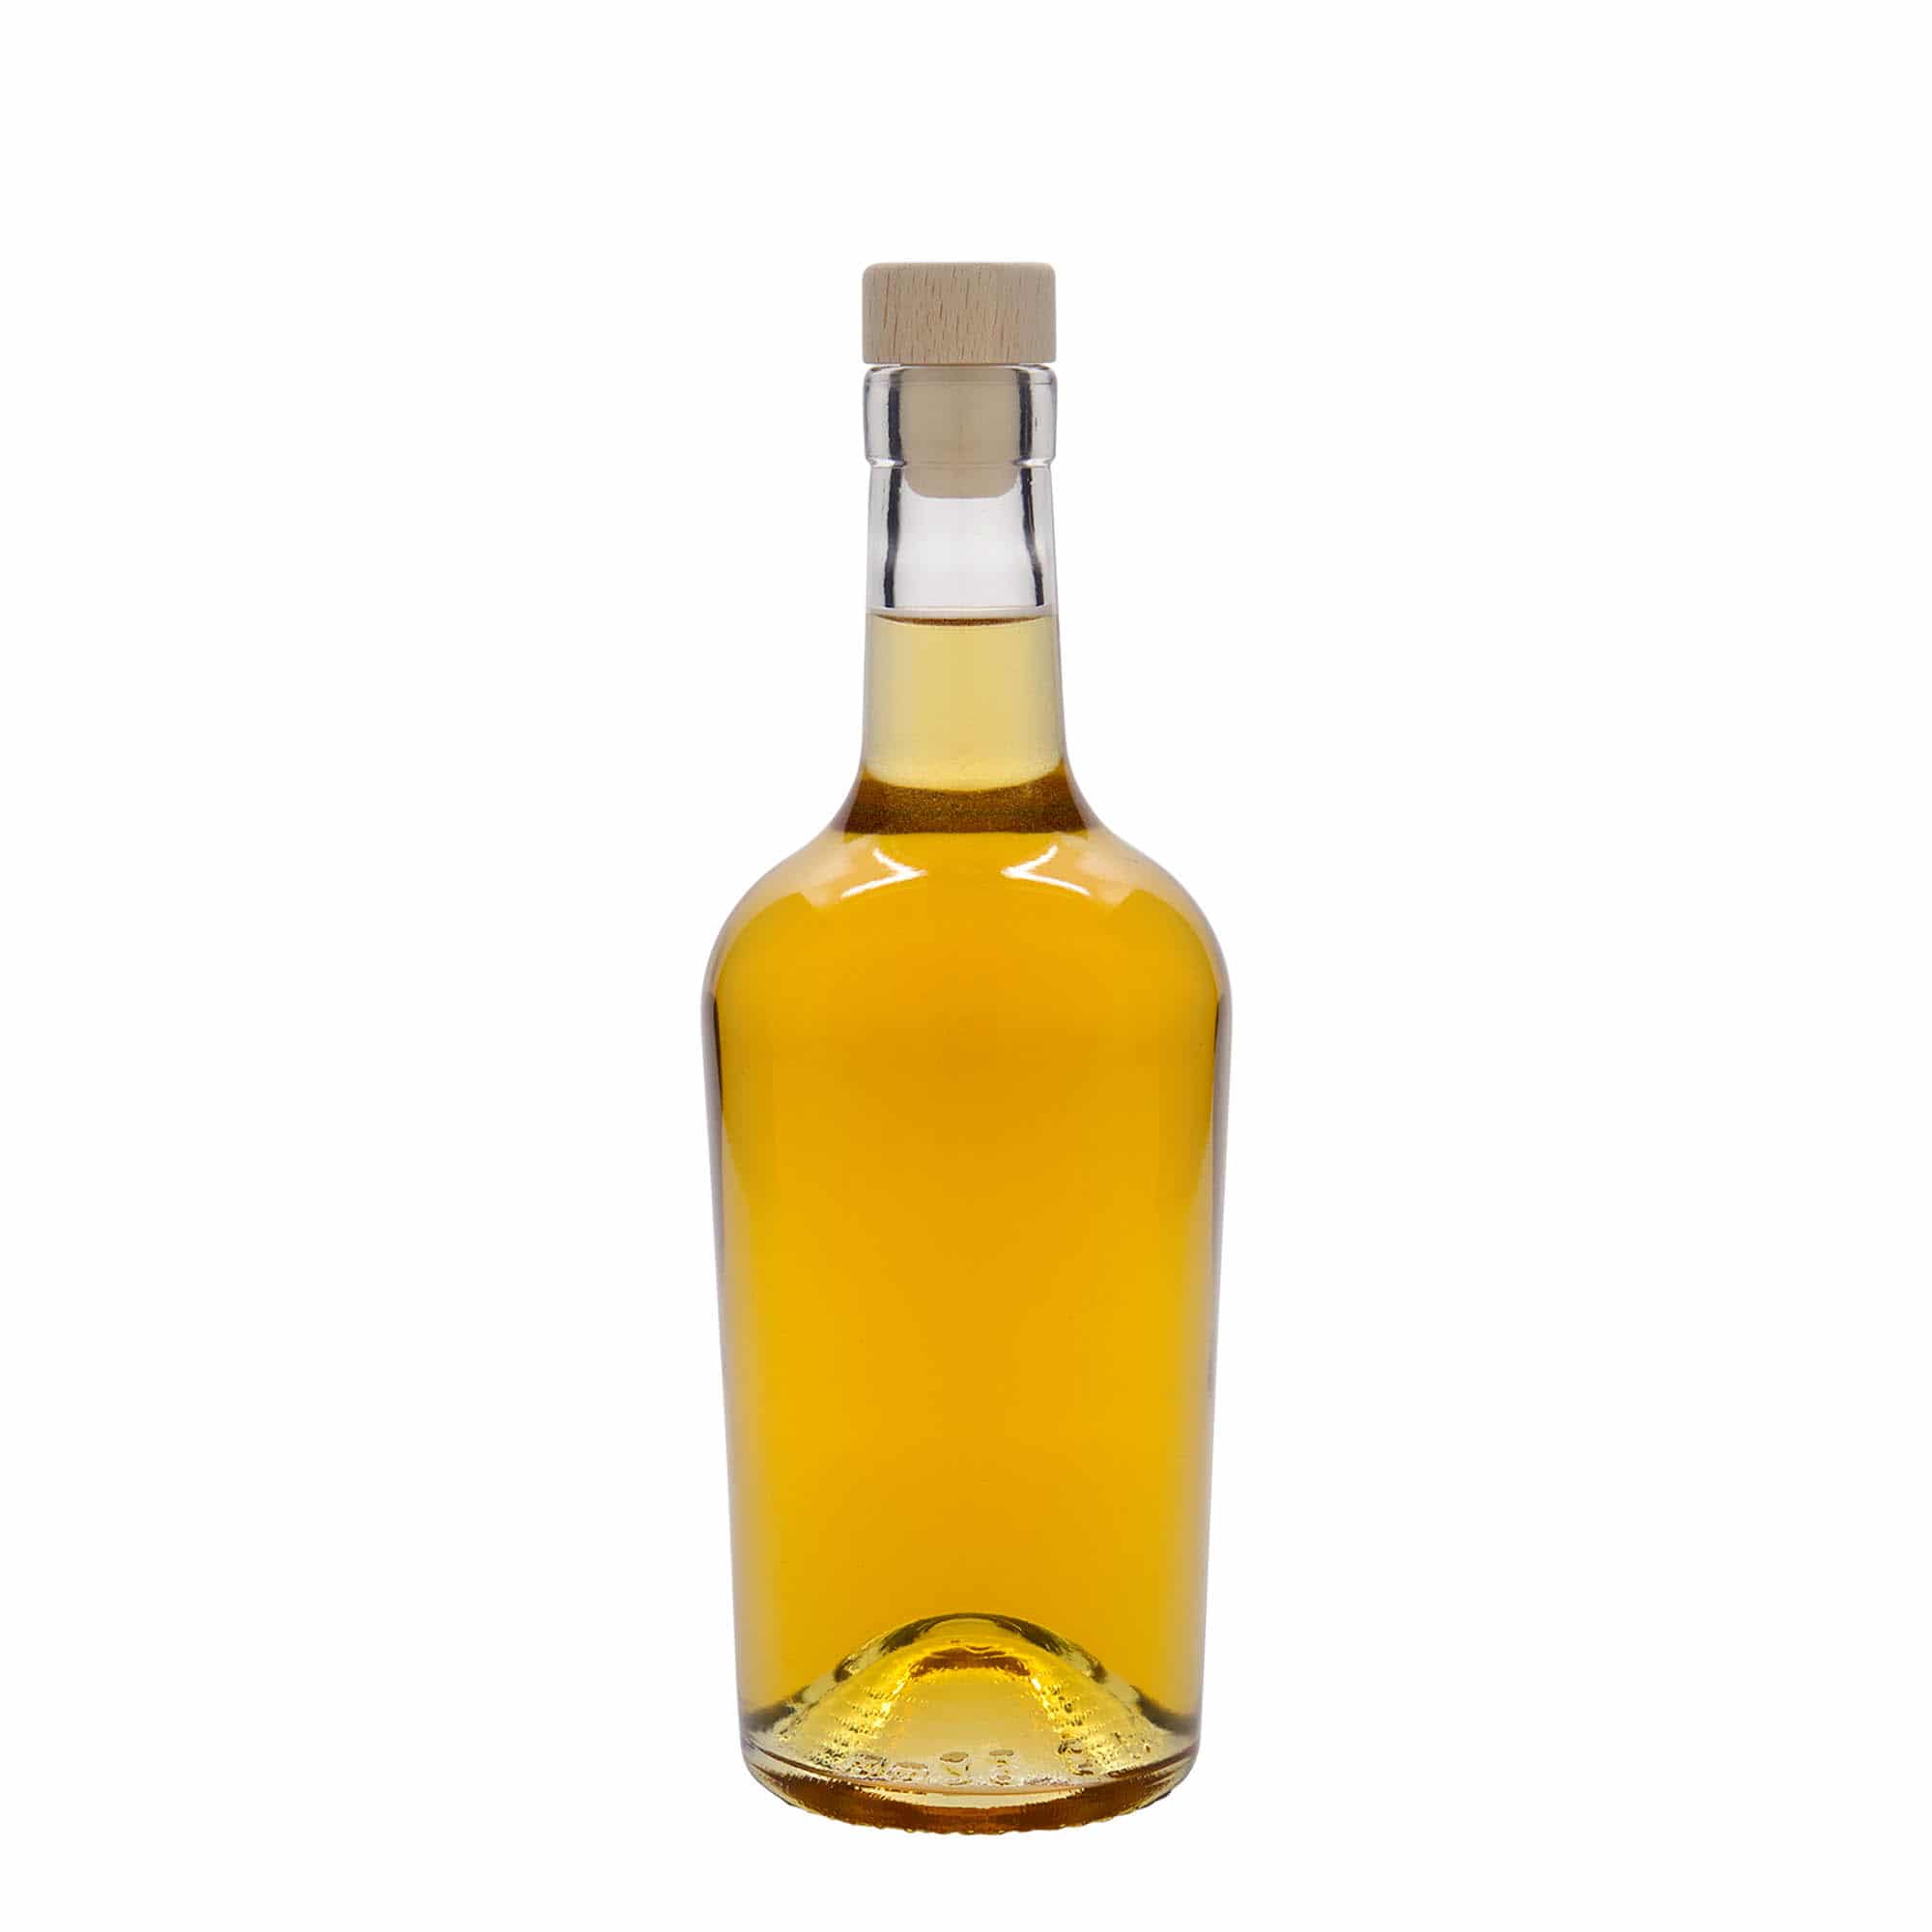 500 ml glass bottle 'Margarethe', closure: cork